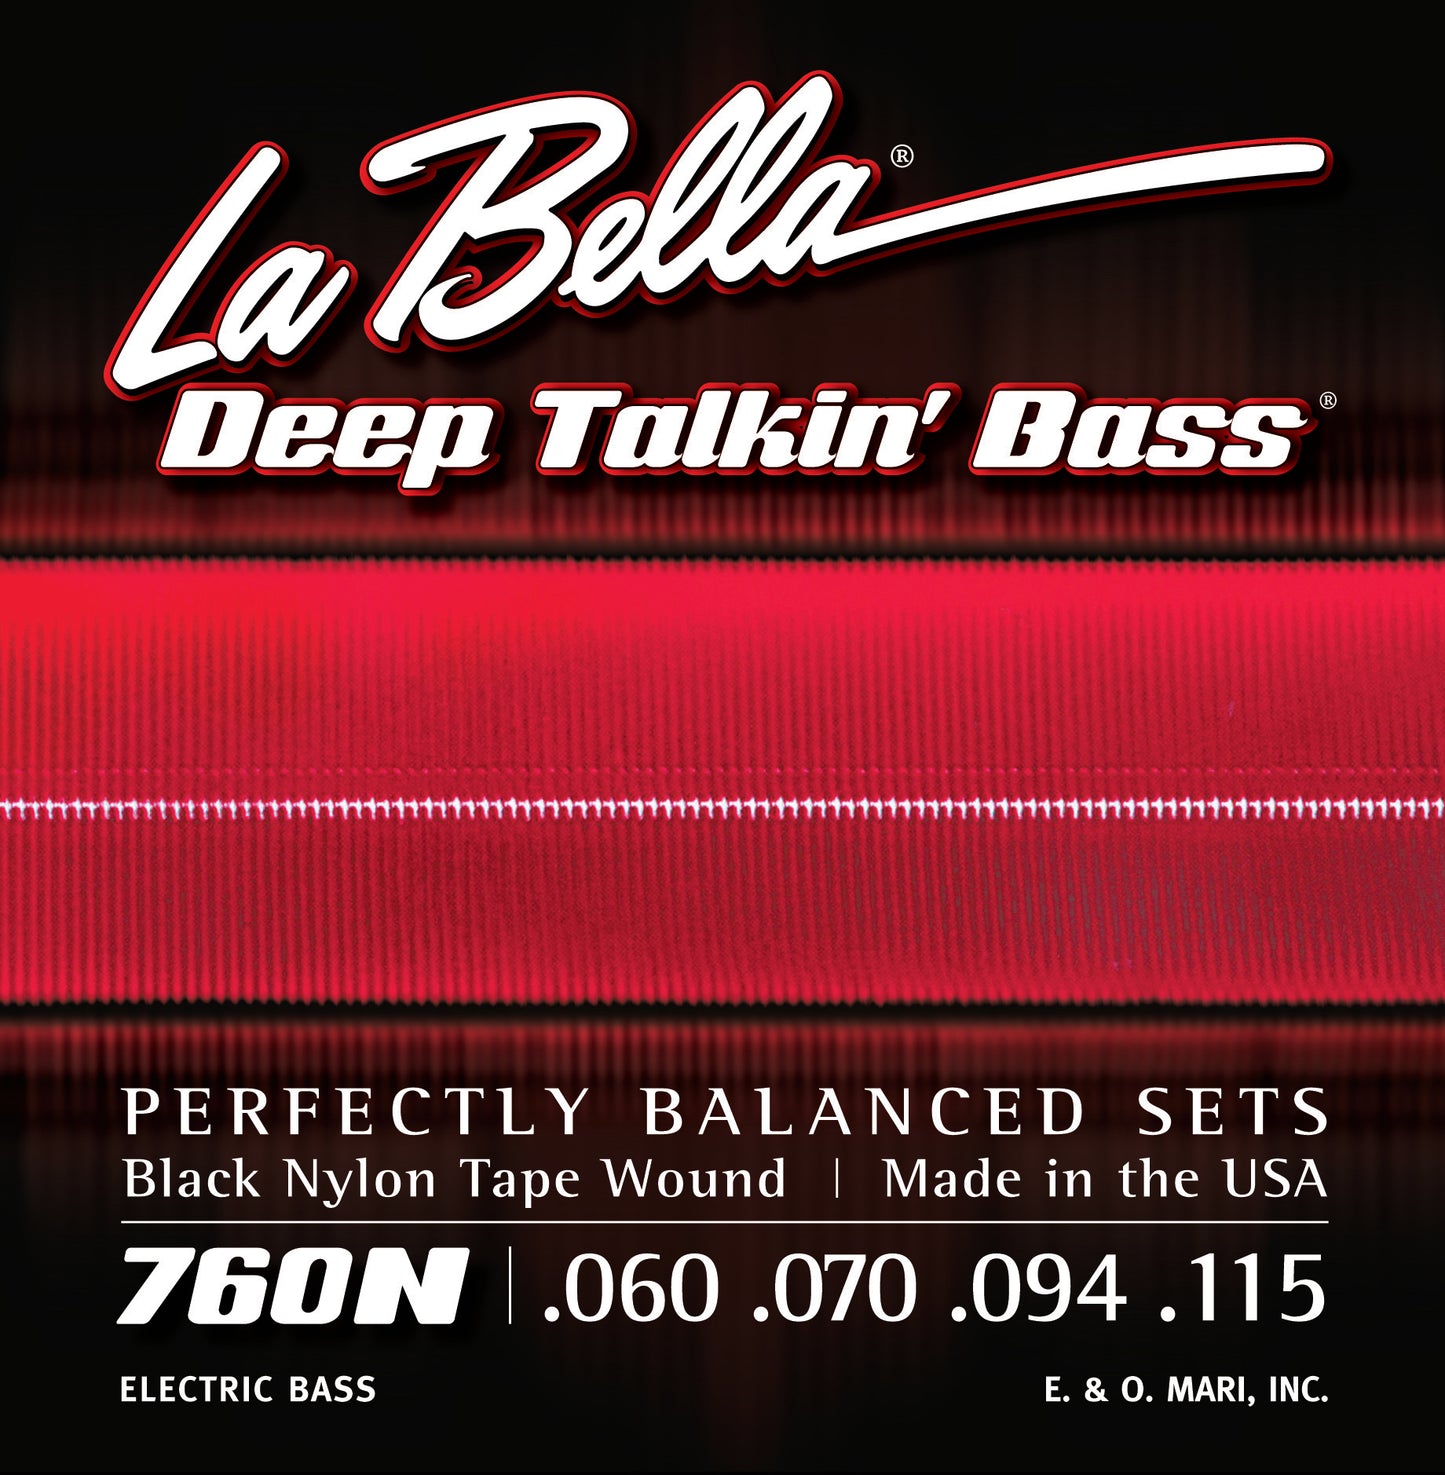 La Bella 760N DTB Black Nylon Tape Bass Strings - Standard 60-115